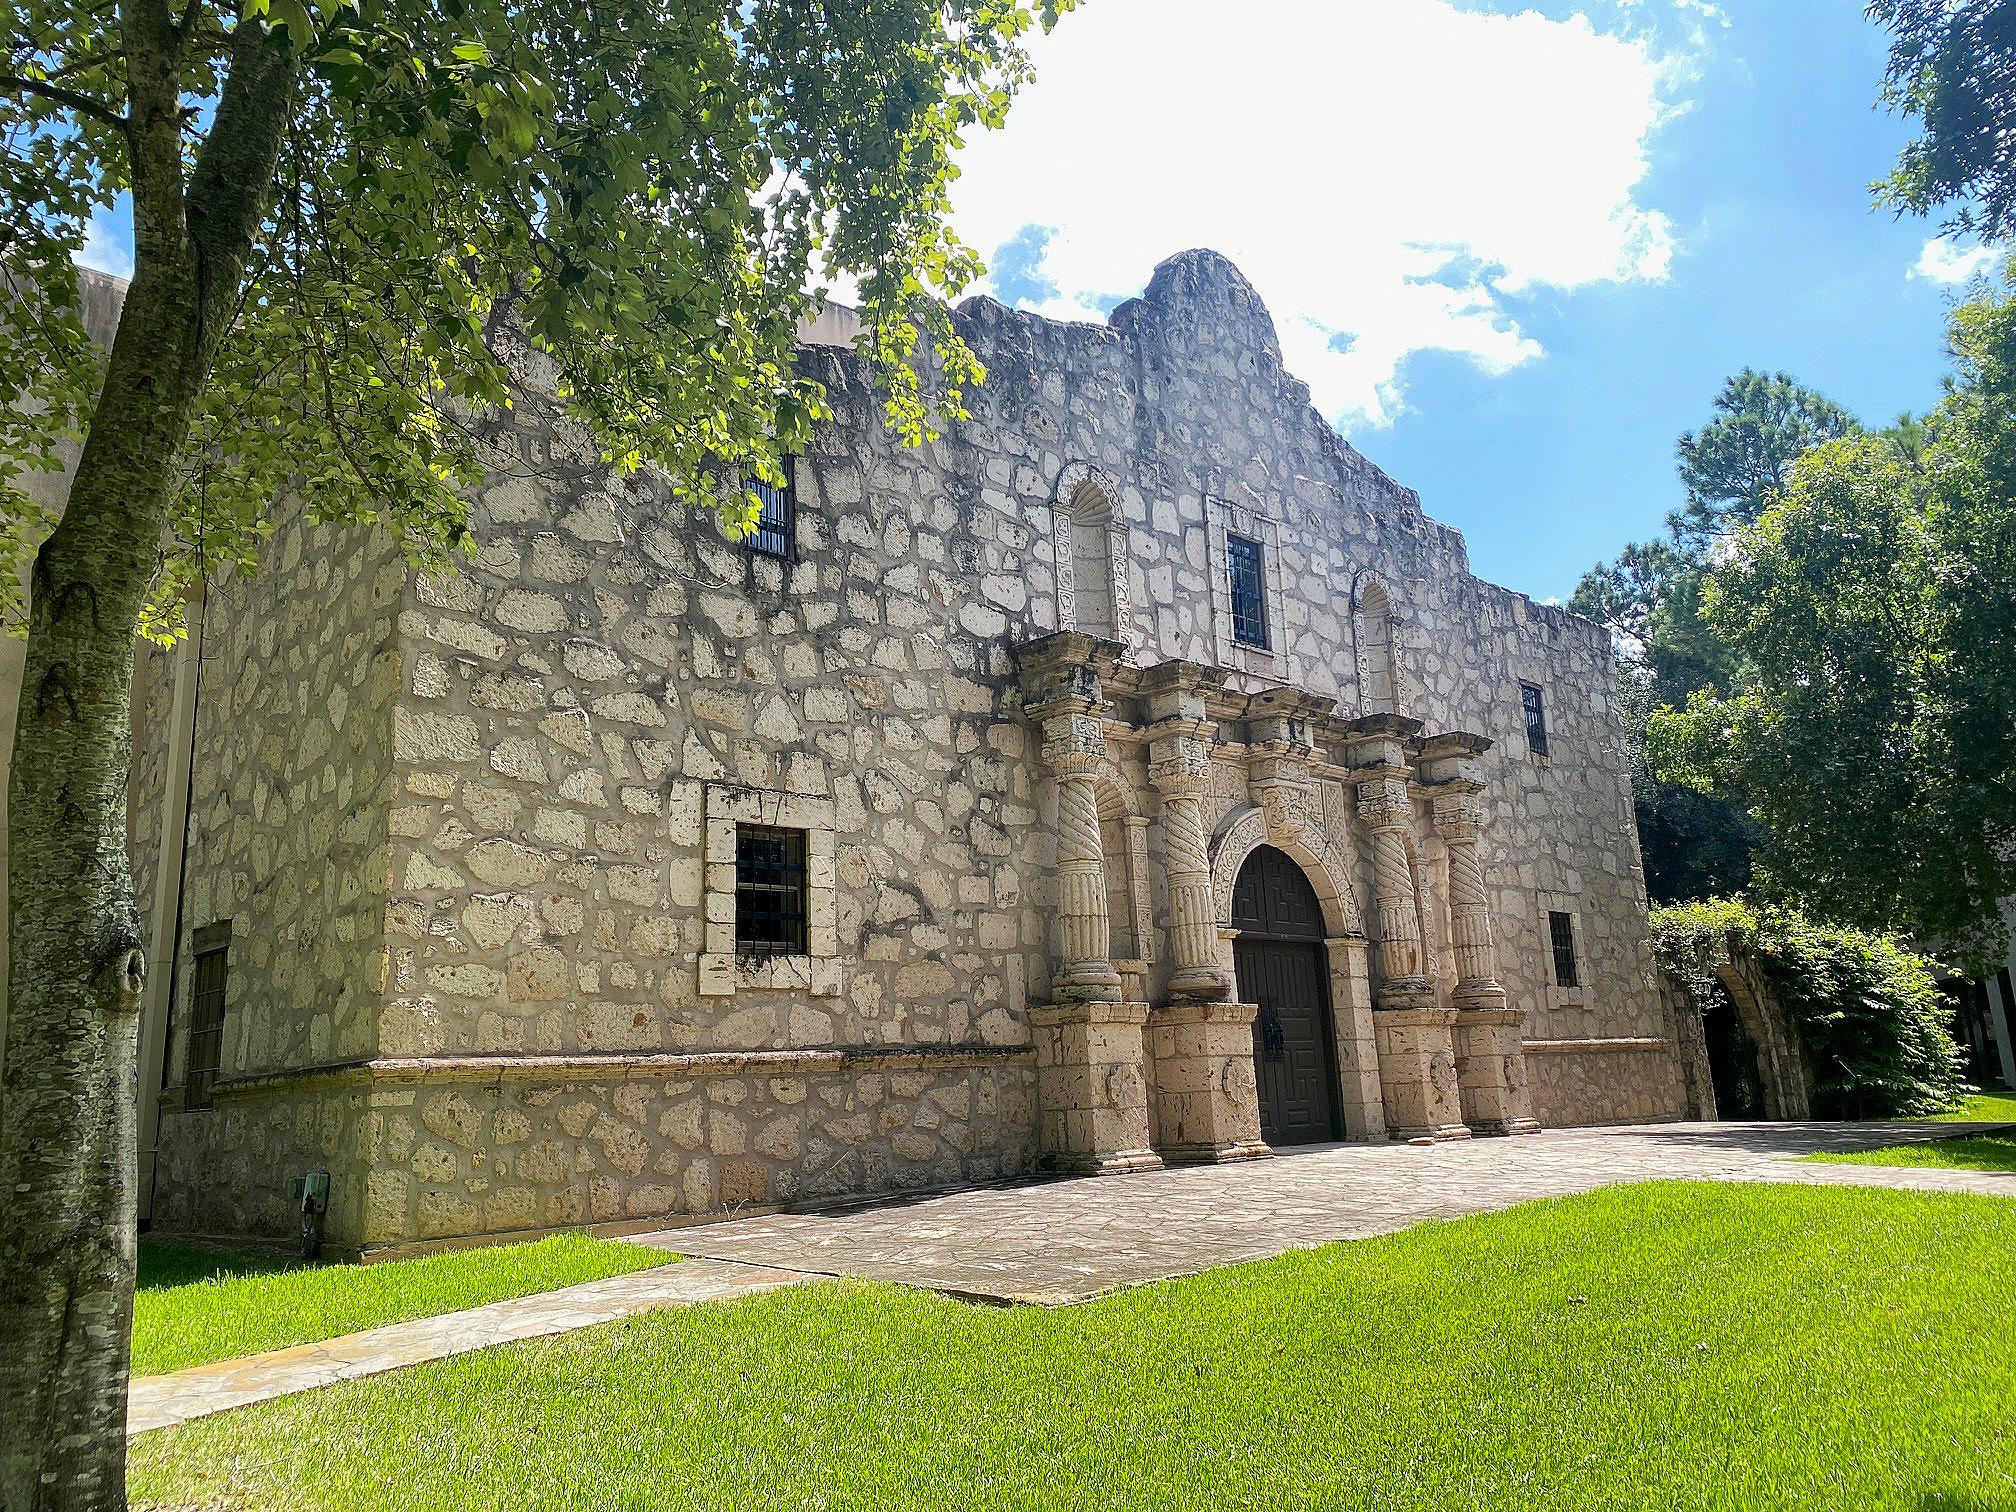 'Alamo' replica venue in Cypress facing daunting future ...